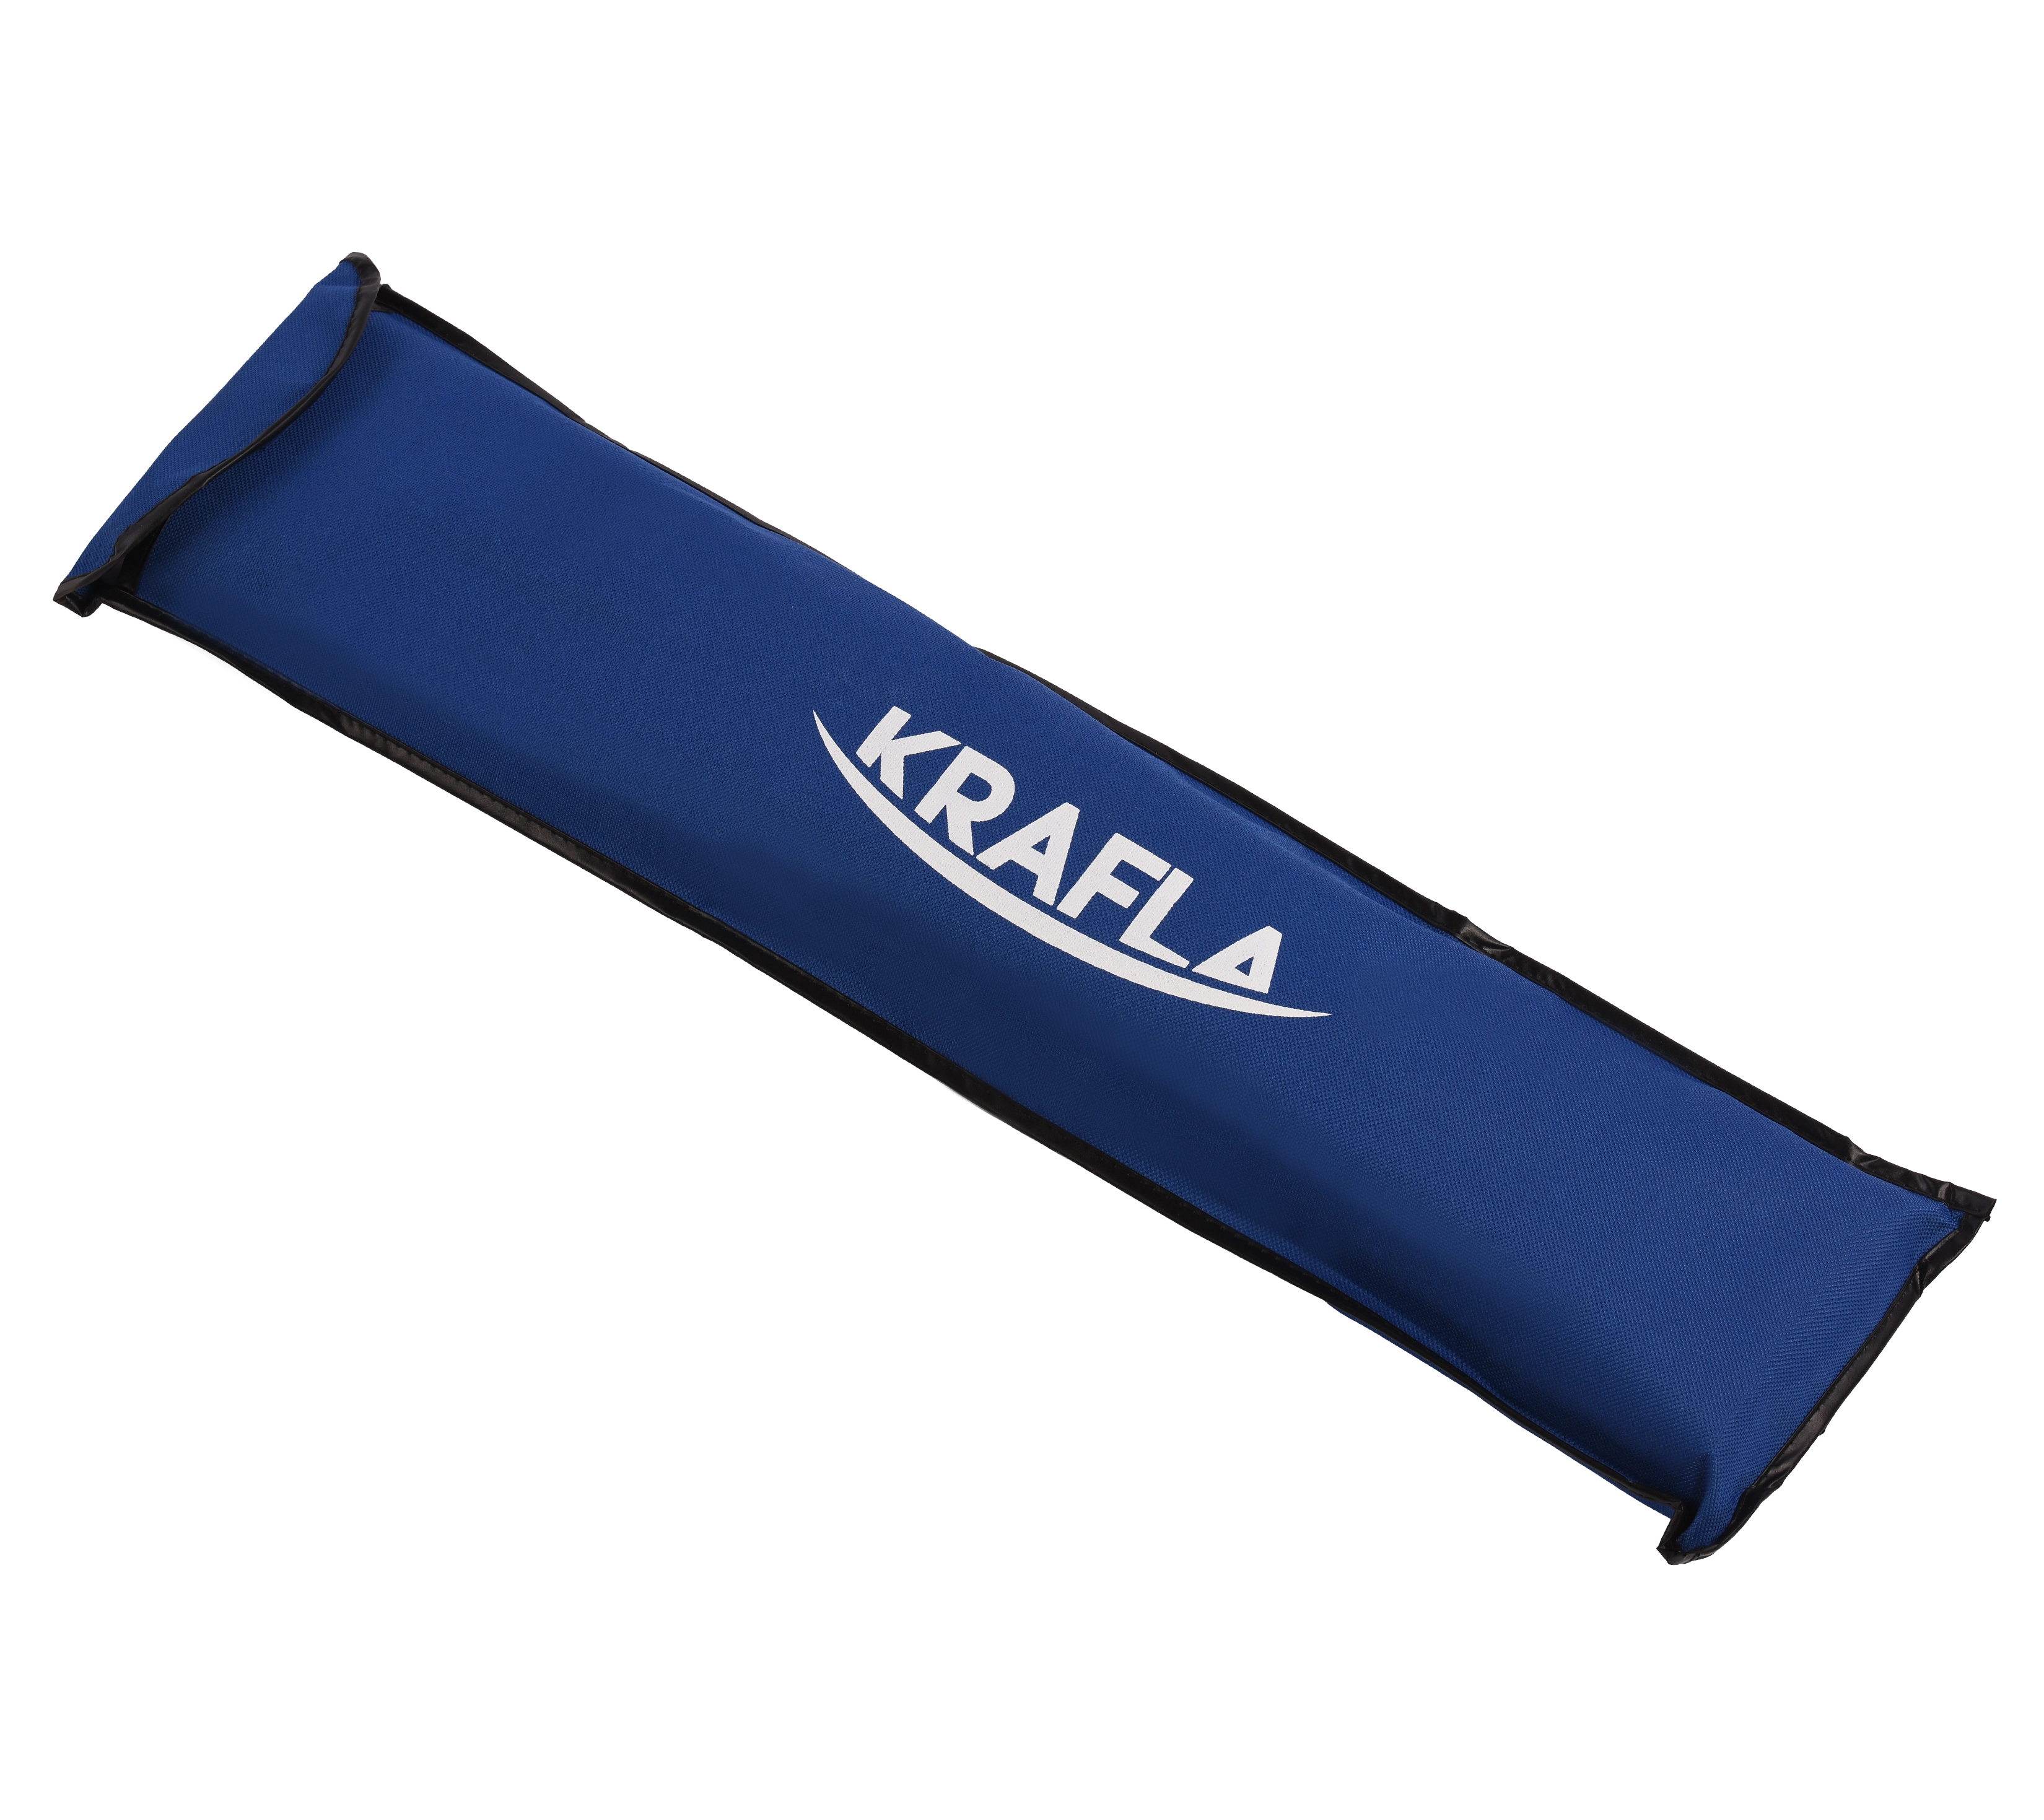 Особенности Сетка для бадминтона со стойками KRAFLA N-C300